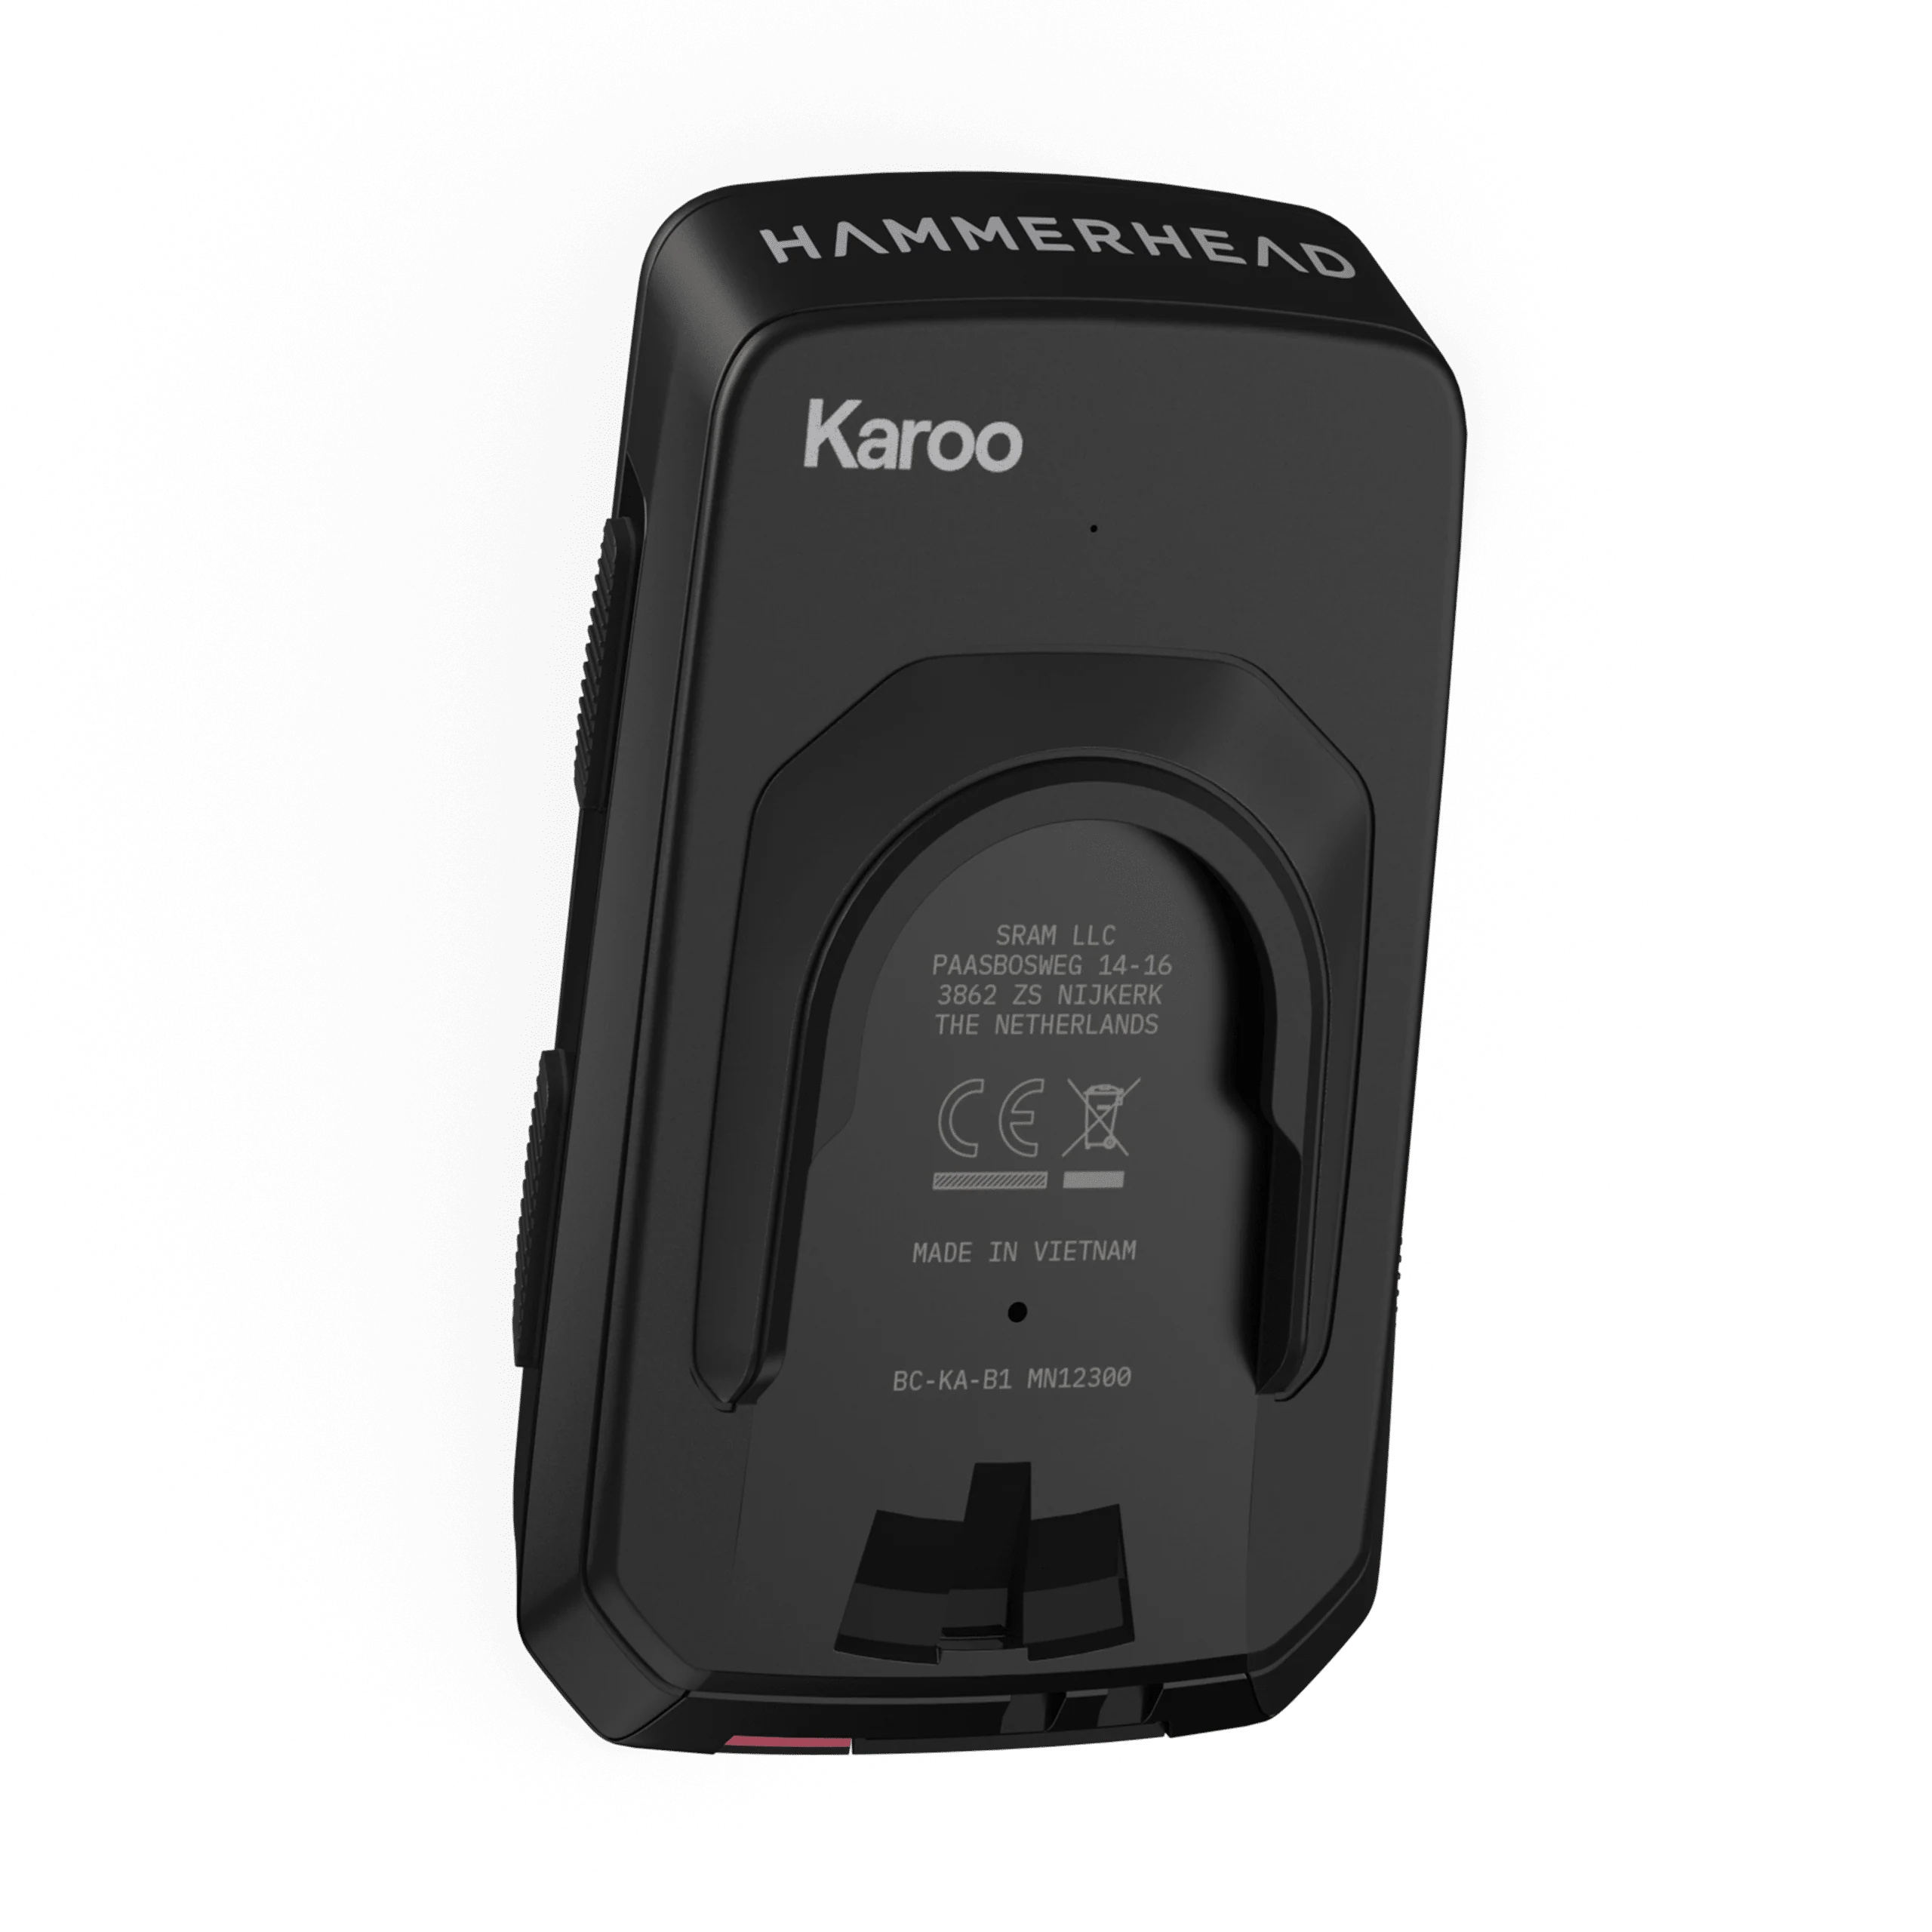 Hammerhead Karoo B1 Accessories - Computers